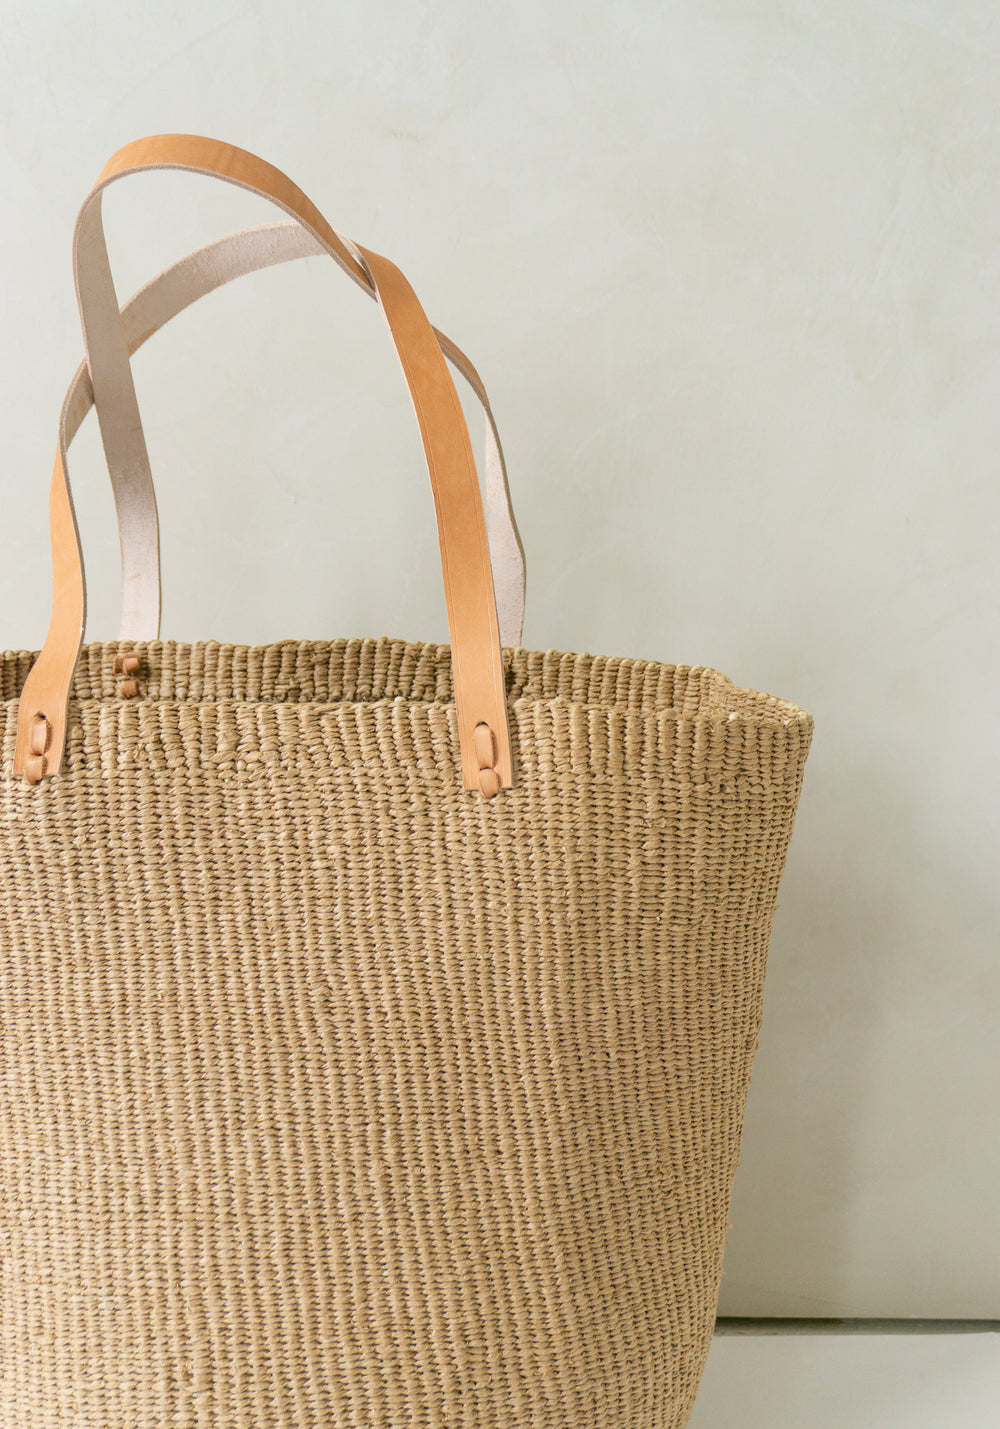 Kiondo Large Shopper Basket in Brown